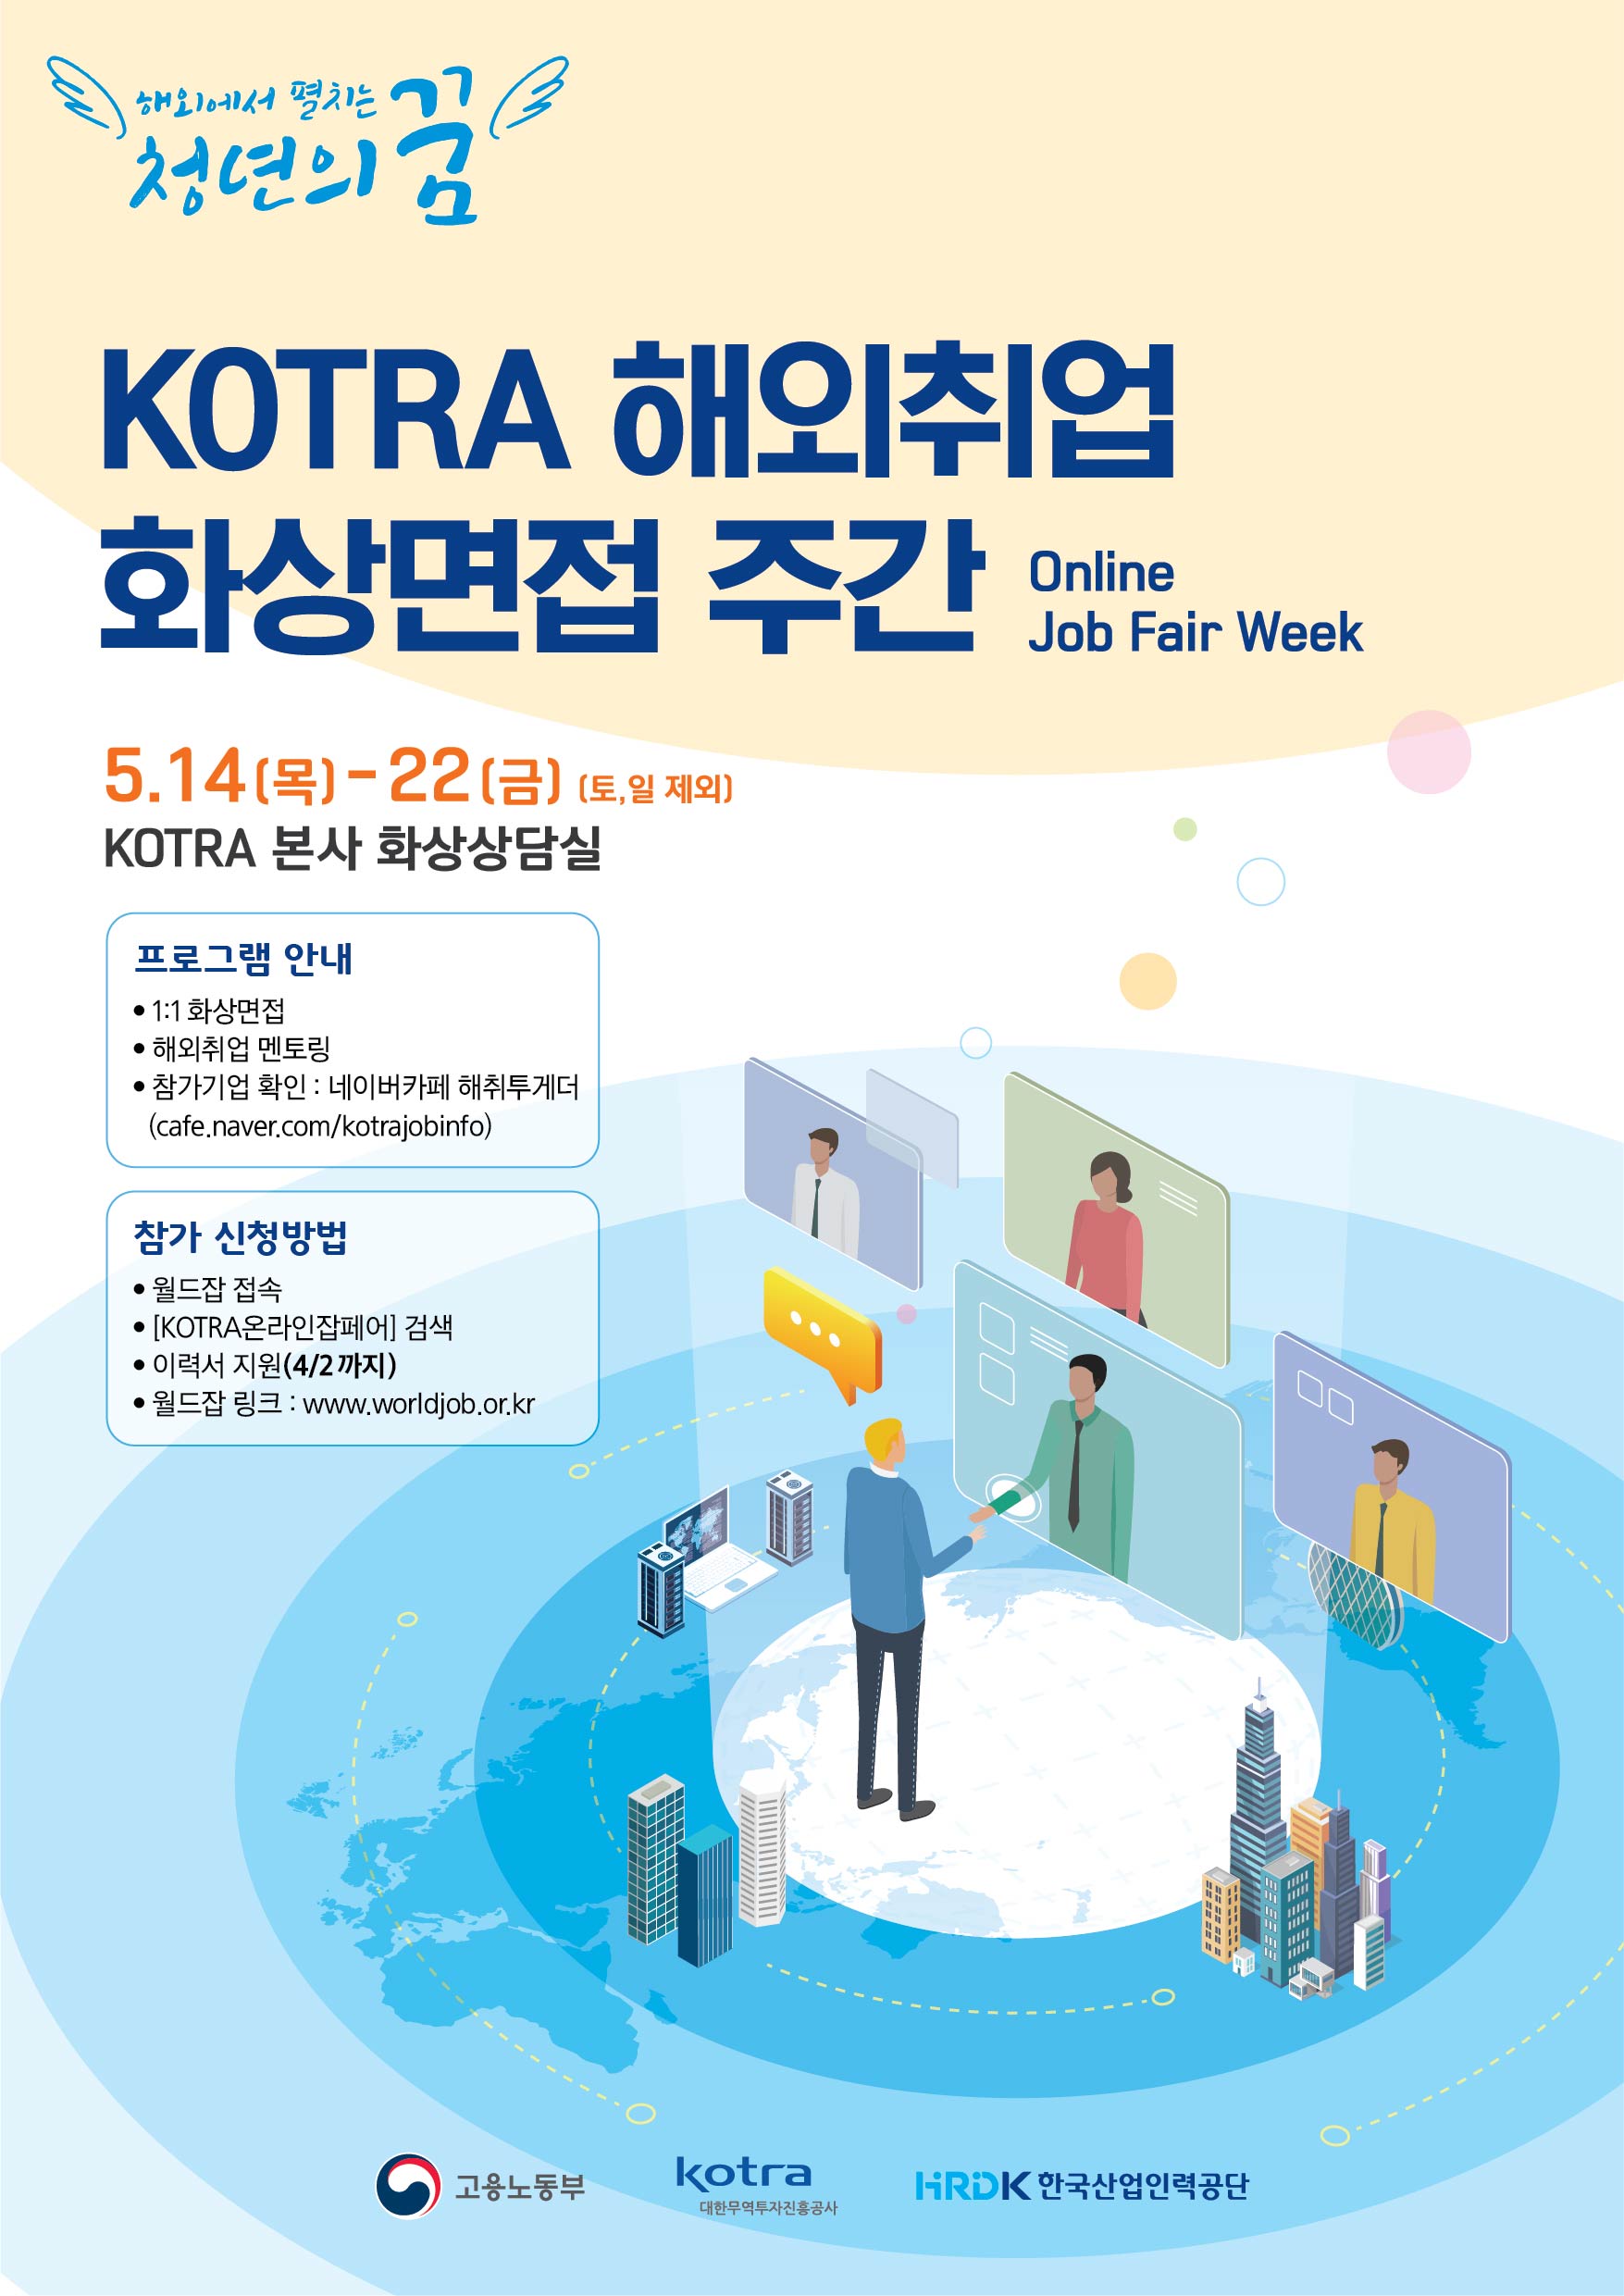 KOTRA 해외취업 화상면접 주간 (Online Job Fair Week 2020) 안내